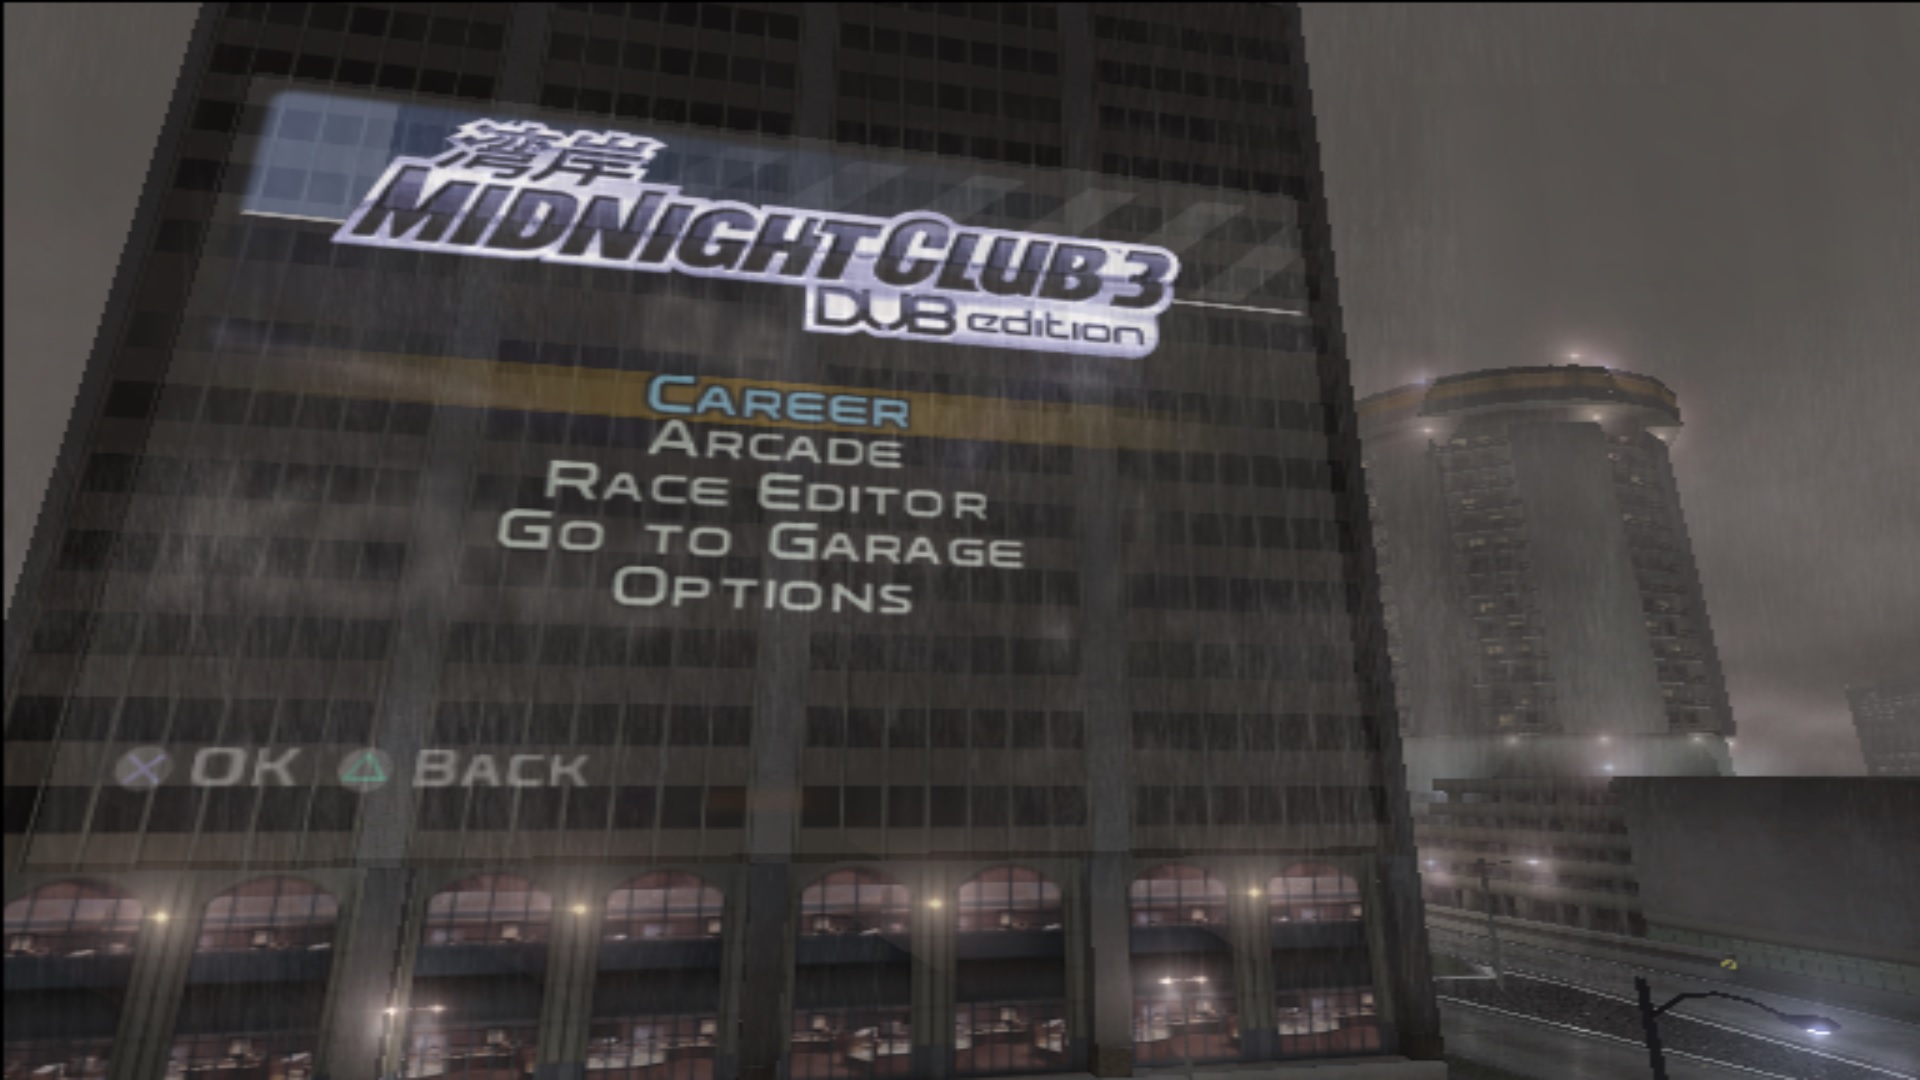 midnight club 3 dub edition